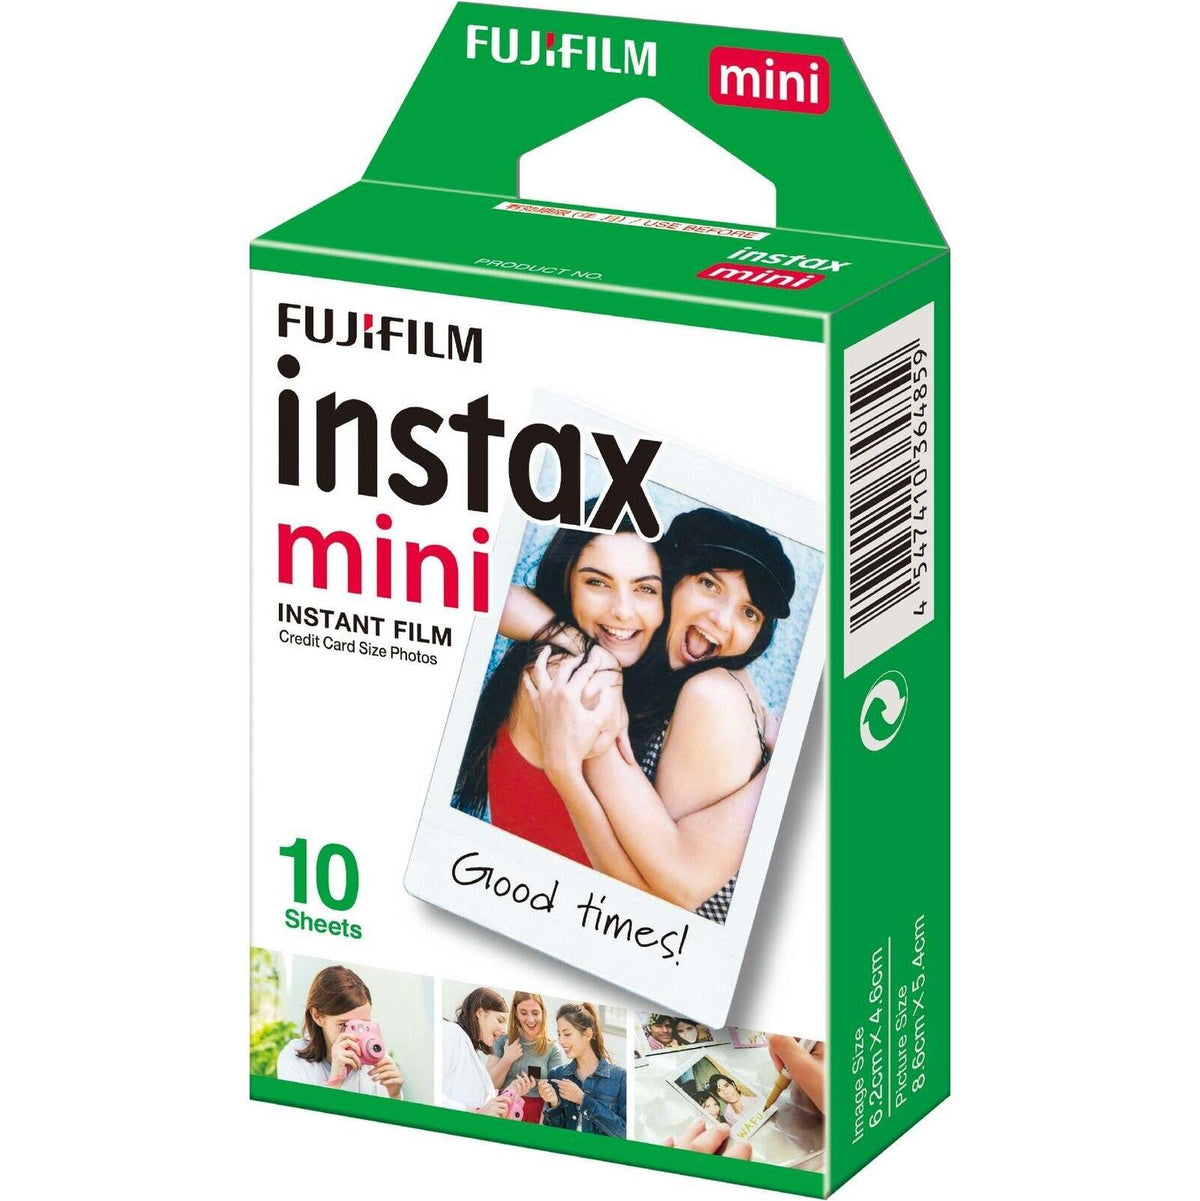 Fotopapír pro Fujifilm Instax Mini, 10ks VYBALENO